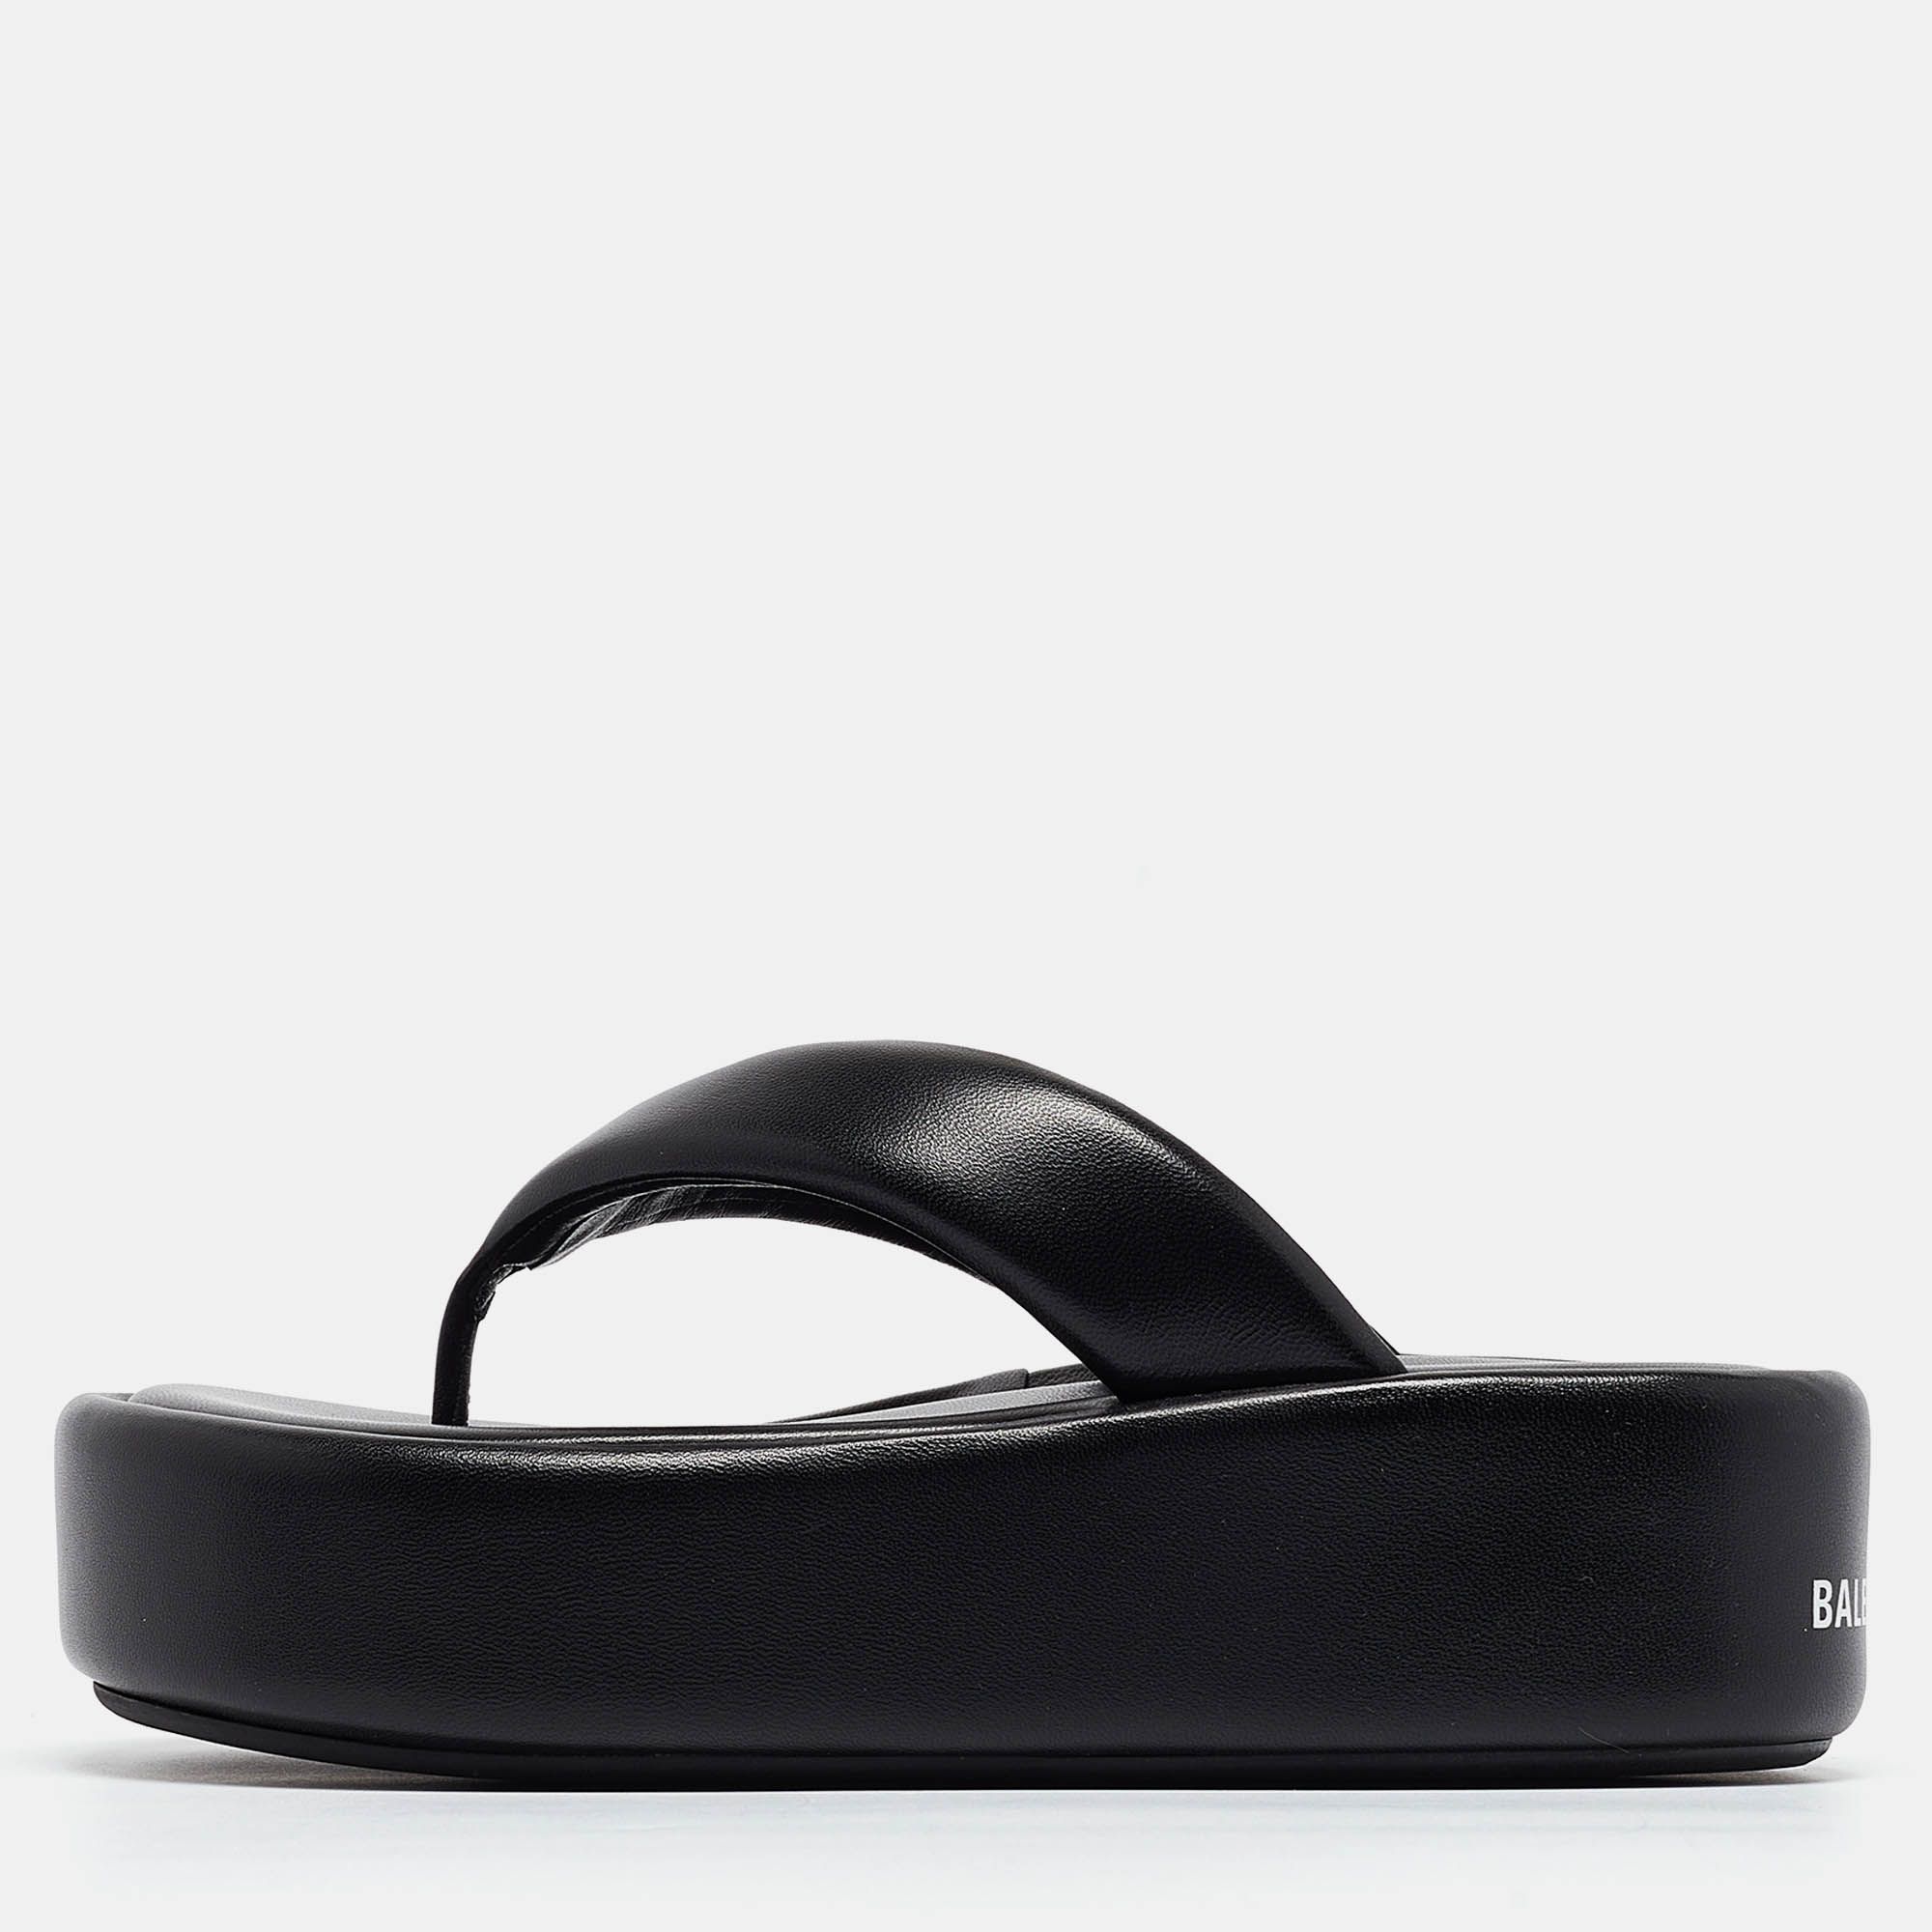 Balenciaga black leather platform thong sandals size 35